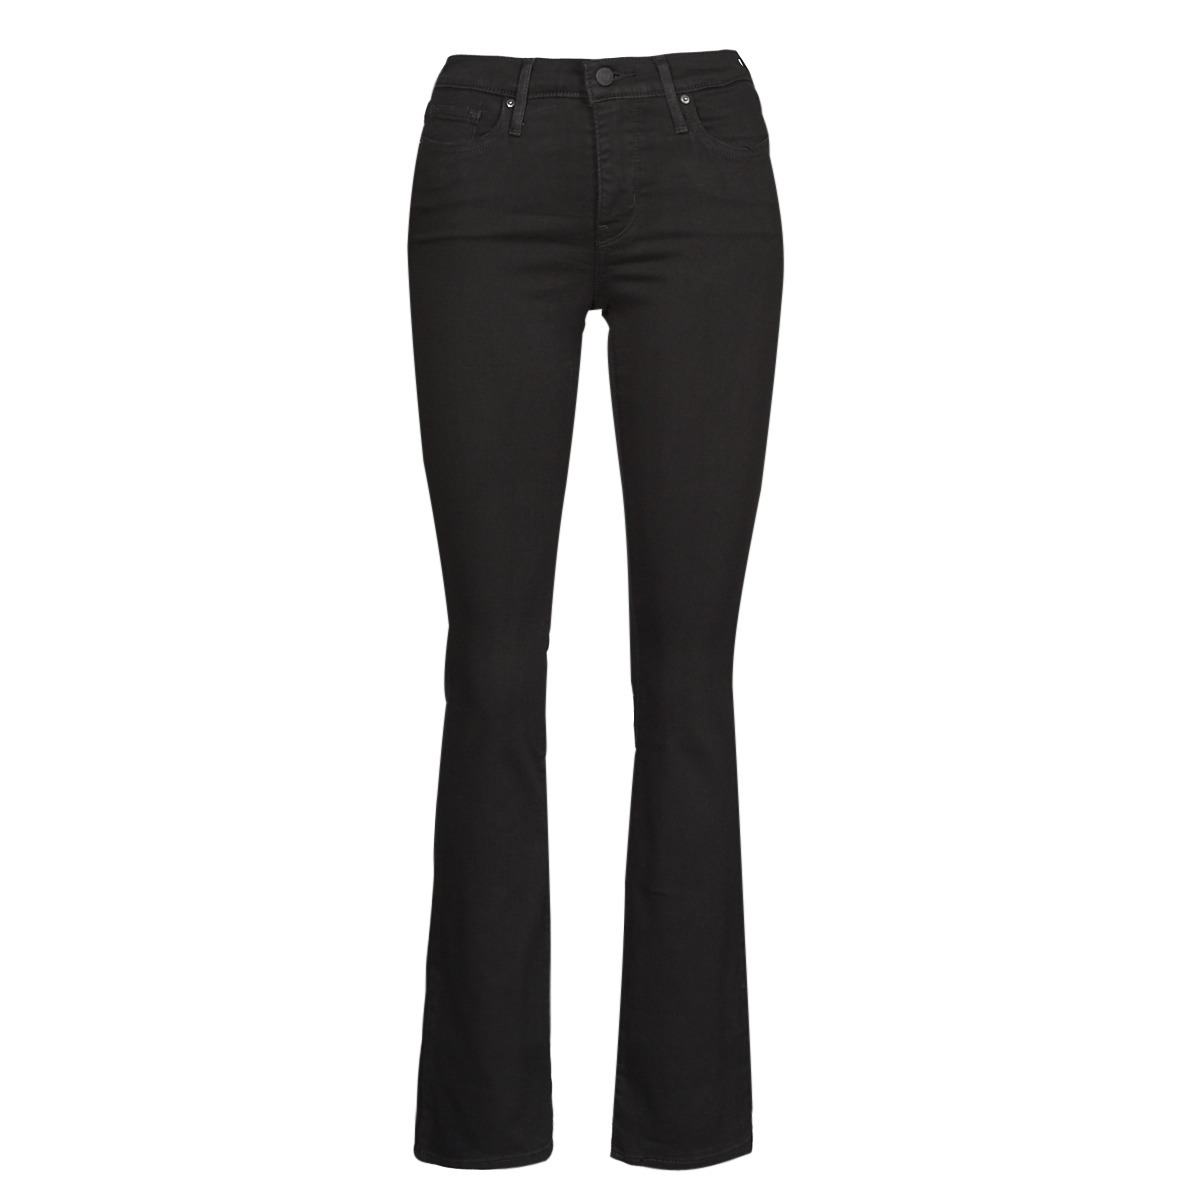 Levi's - Black Bootcut Jeans - Spartoo Woman GOOFASH